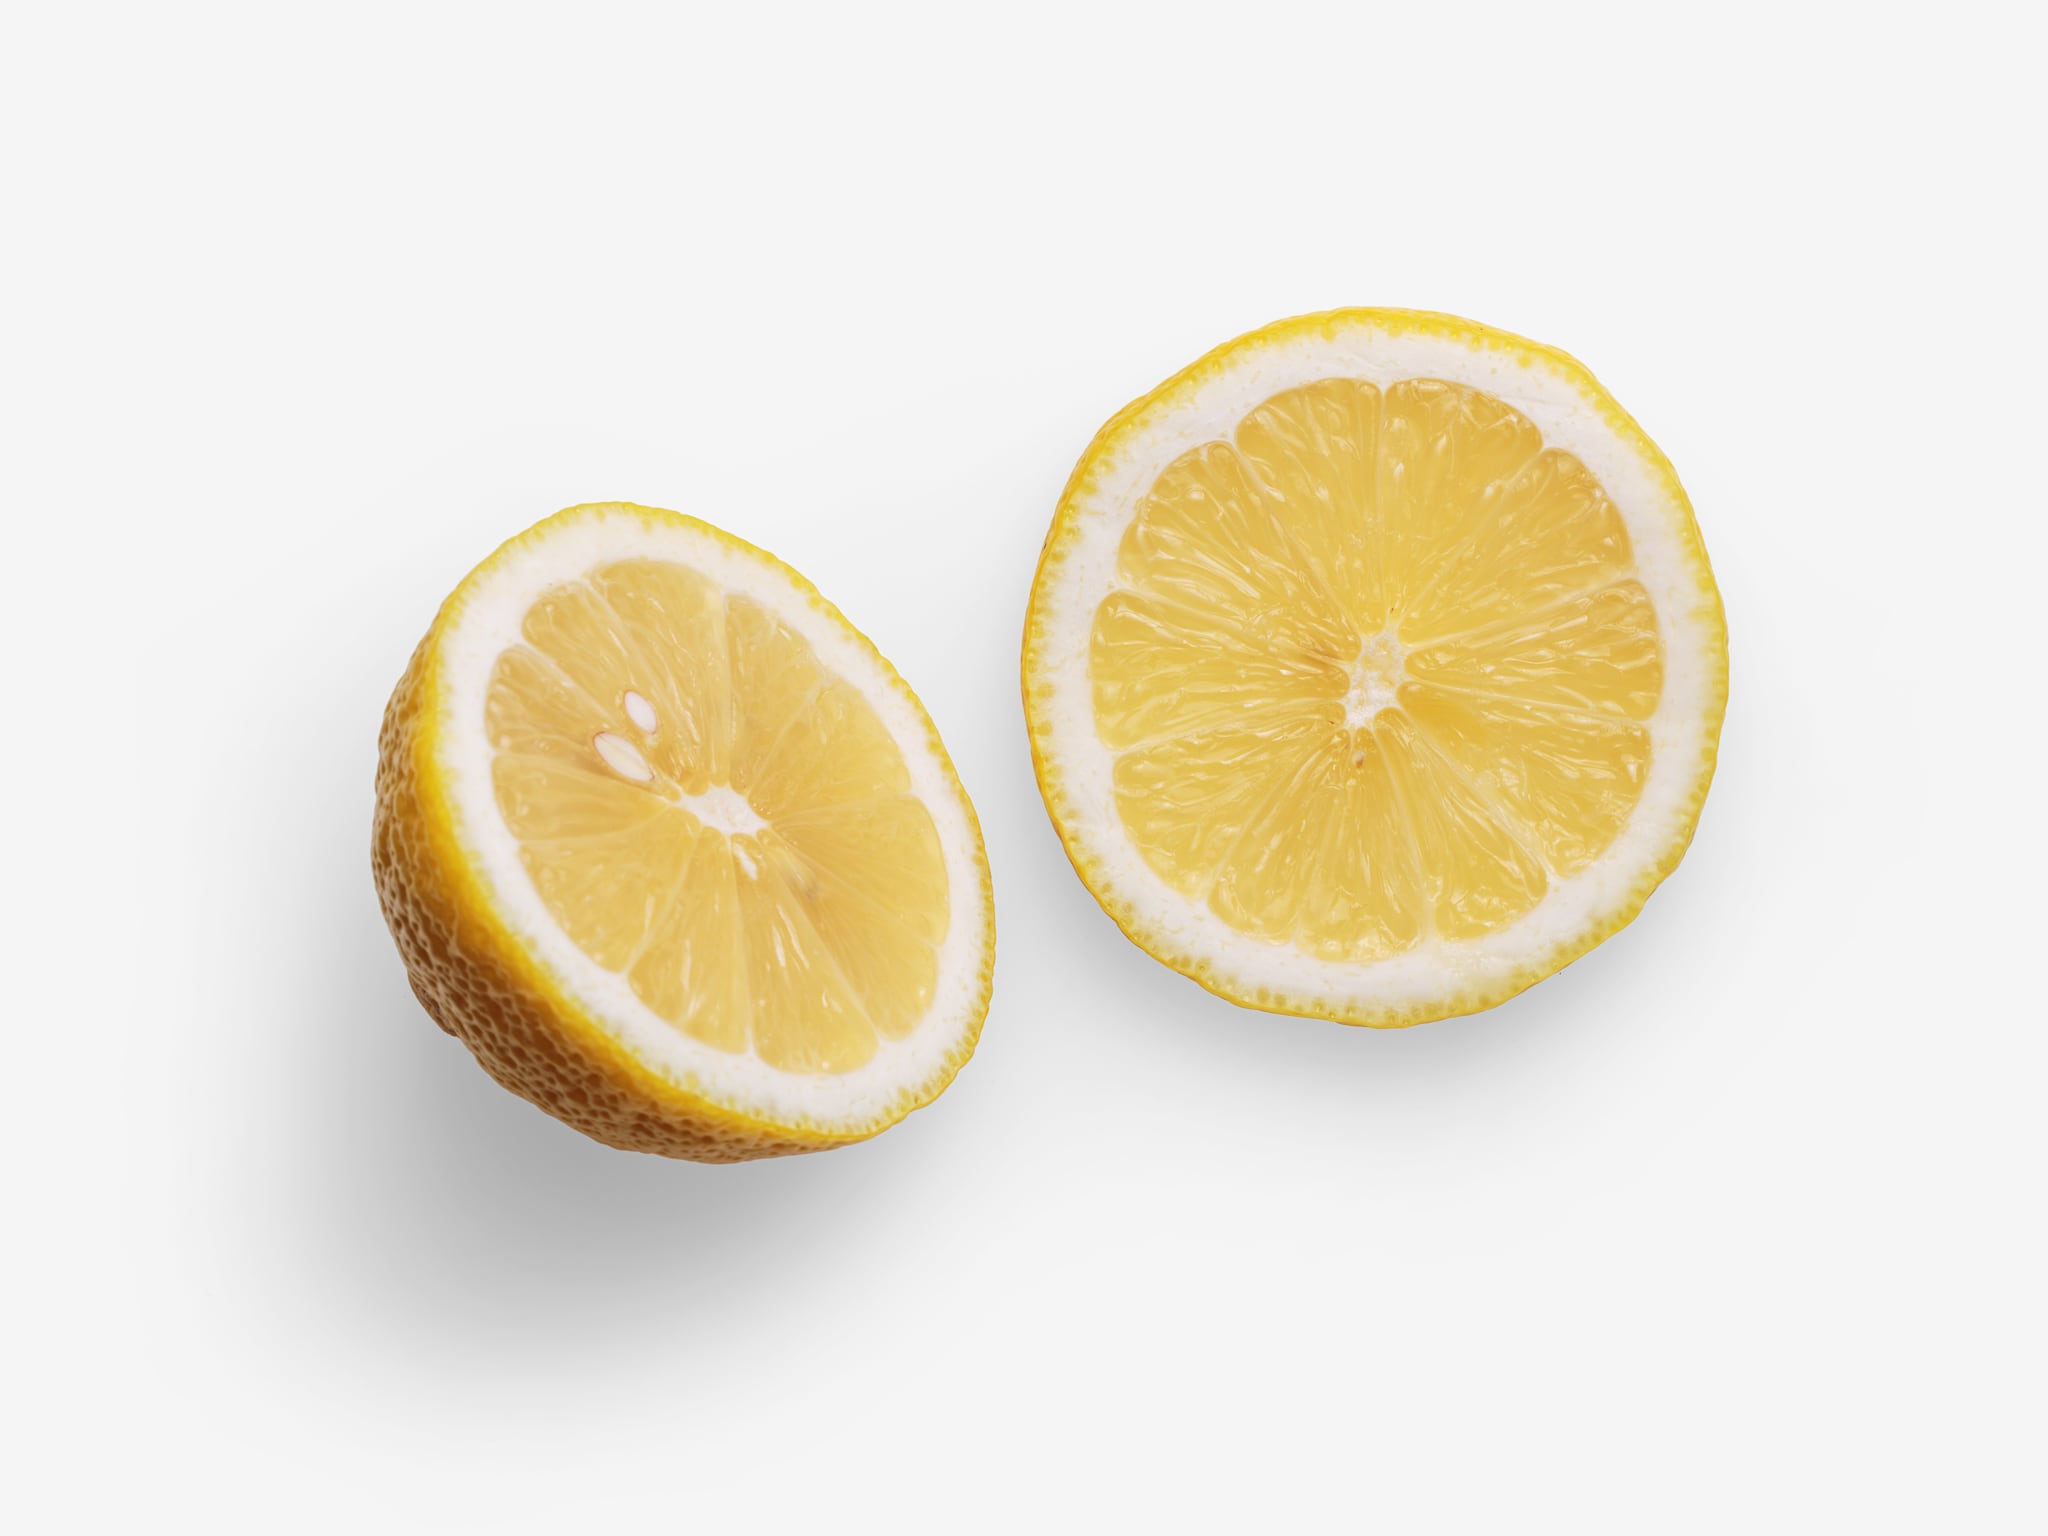 Lemon PSD image with transparent background